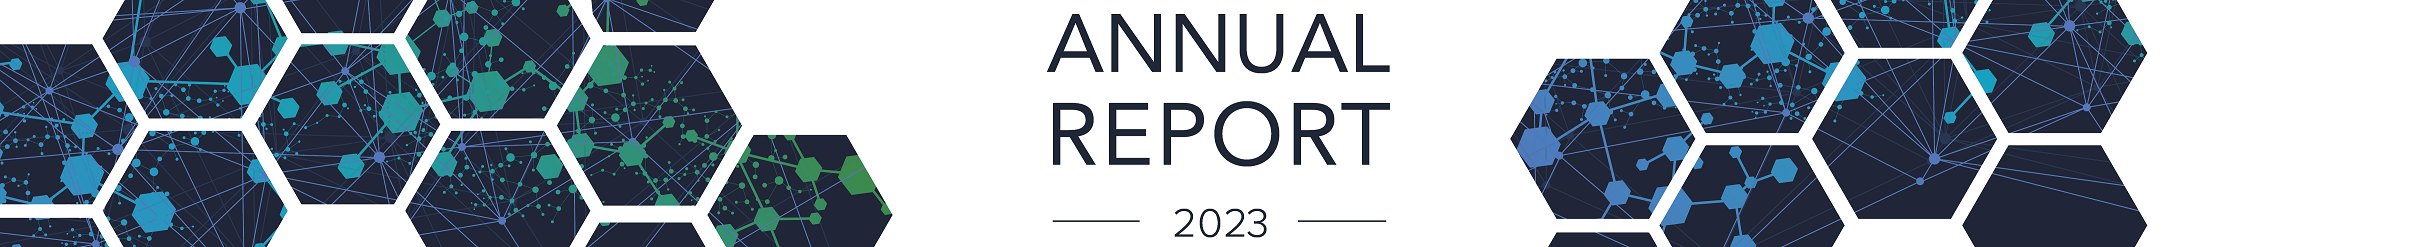 annual report hero image